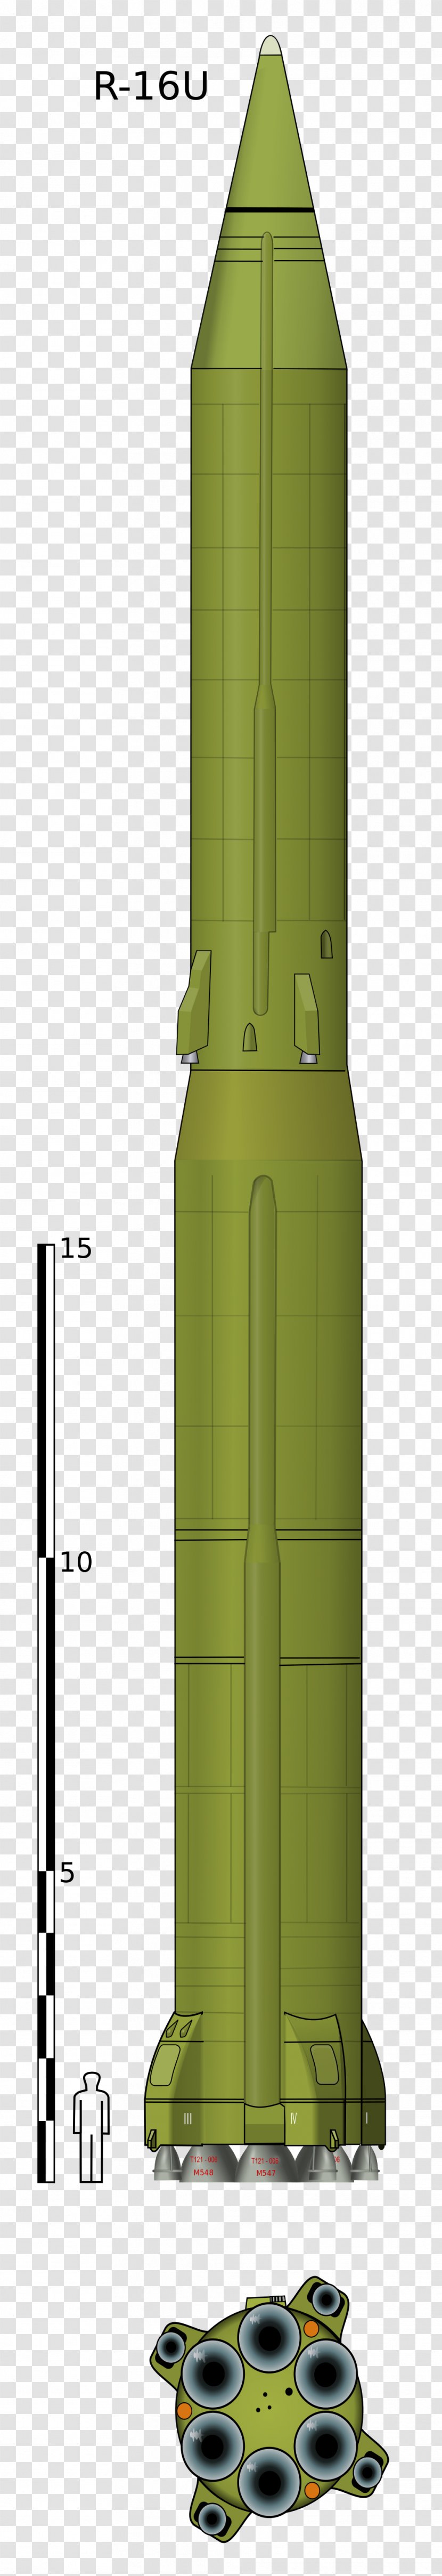 Rocket R-16 Intercontinental Ballistic Missile - Ballistics Transparent PNG